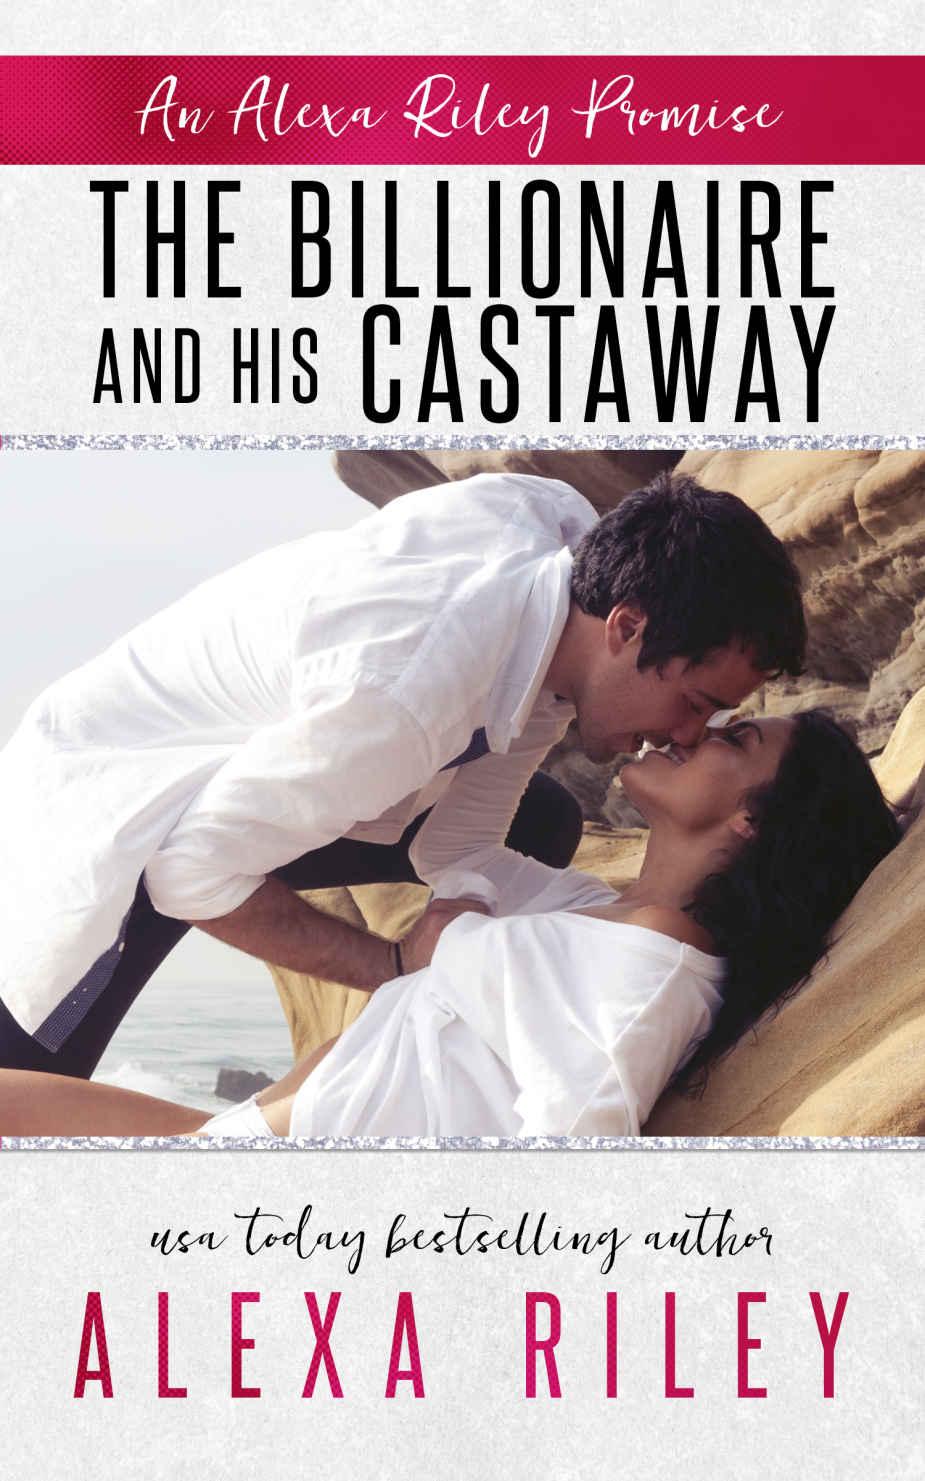 The Billionaire & His Castaway (An Alexa Riley Promises Book 3) by Alexa Riley